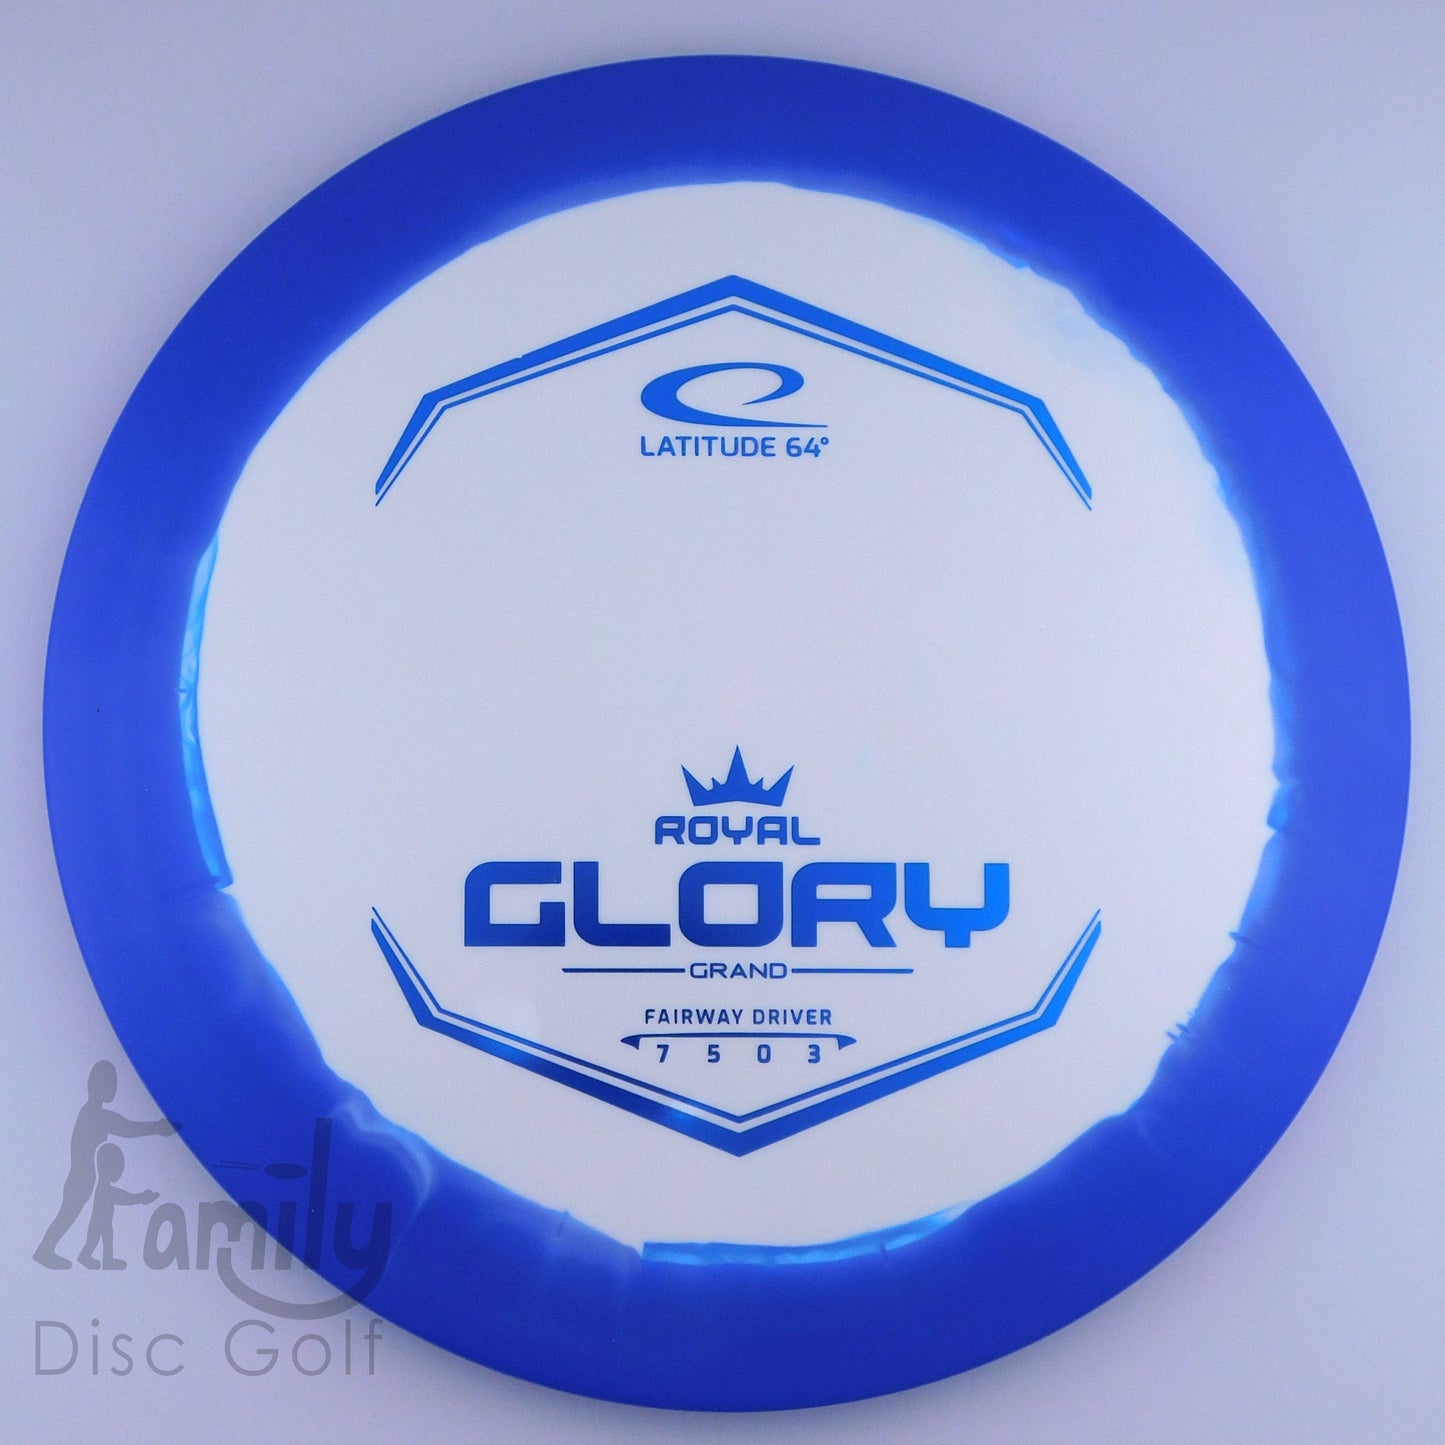 Latitude 64 Glory - Royal Grand Orbit 7│5│0│3 174.8g - White+Blue - Latitude 64° Glory - Grand Orbit - 100691